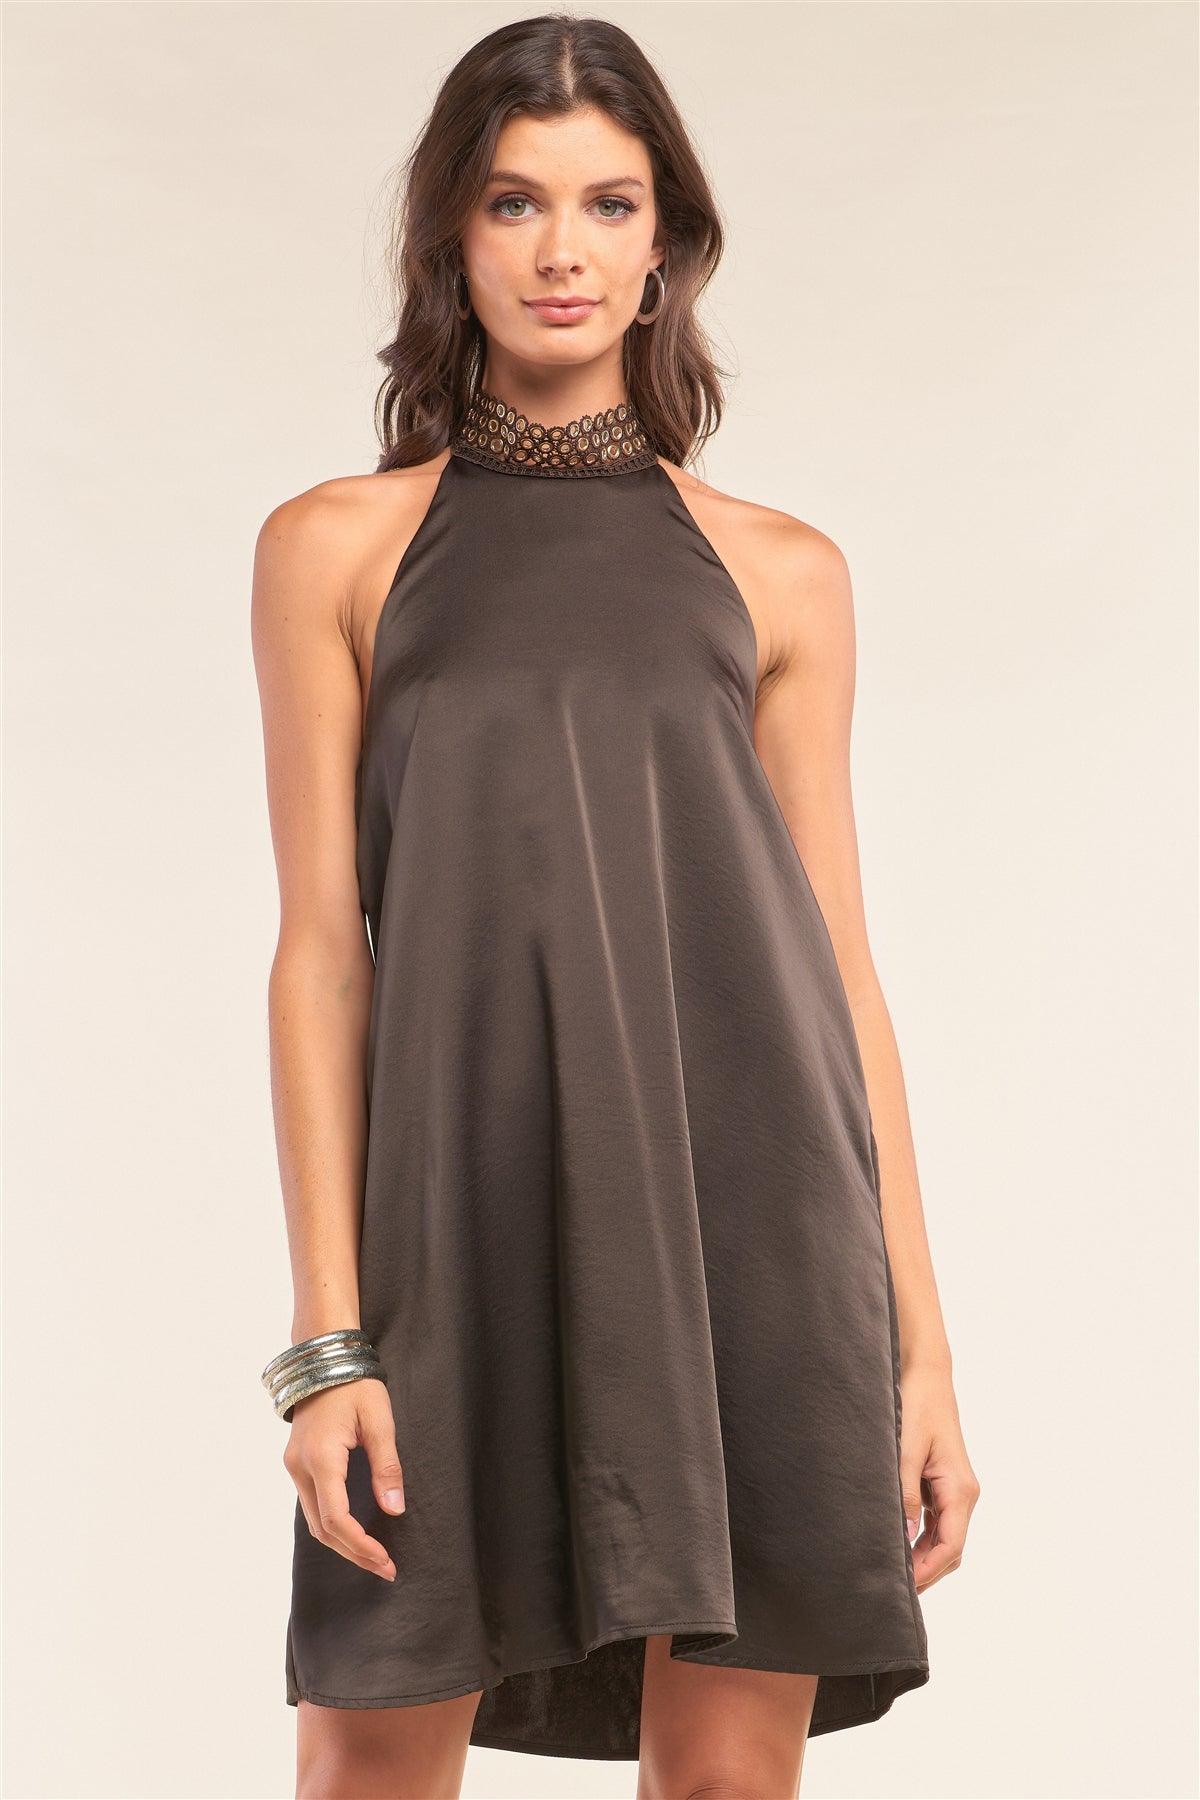 Dark Brown Satin Sleeveless Relaxed Fit Keyhole Trim Self-Tie Halter Neck Mini Dress /2-1-1-2